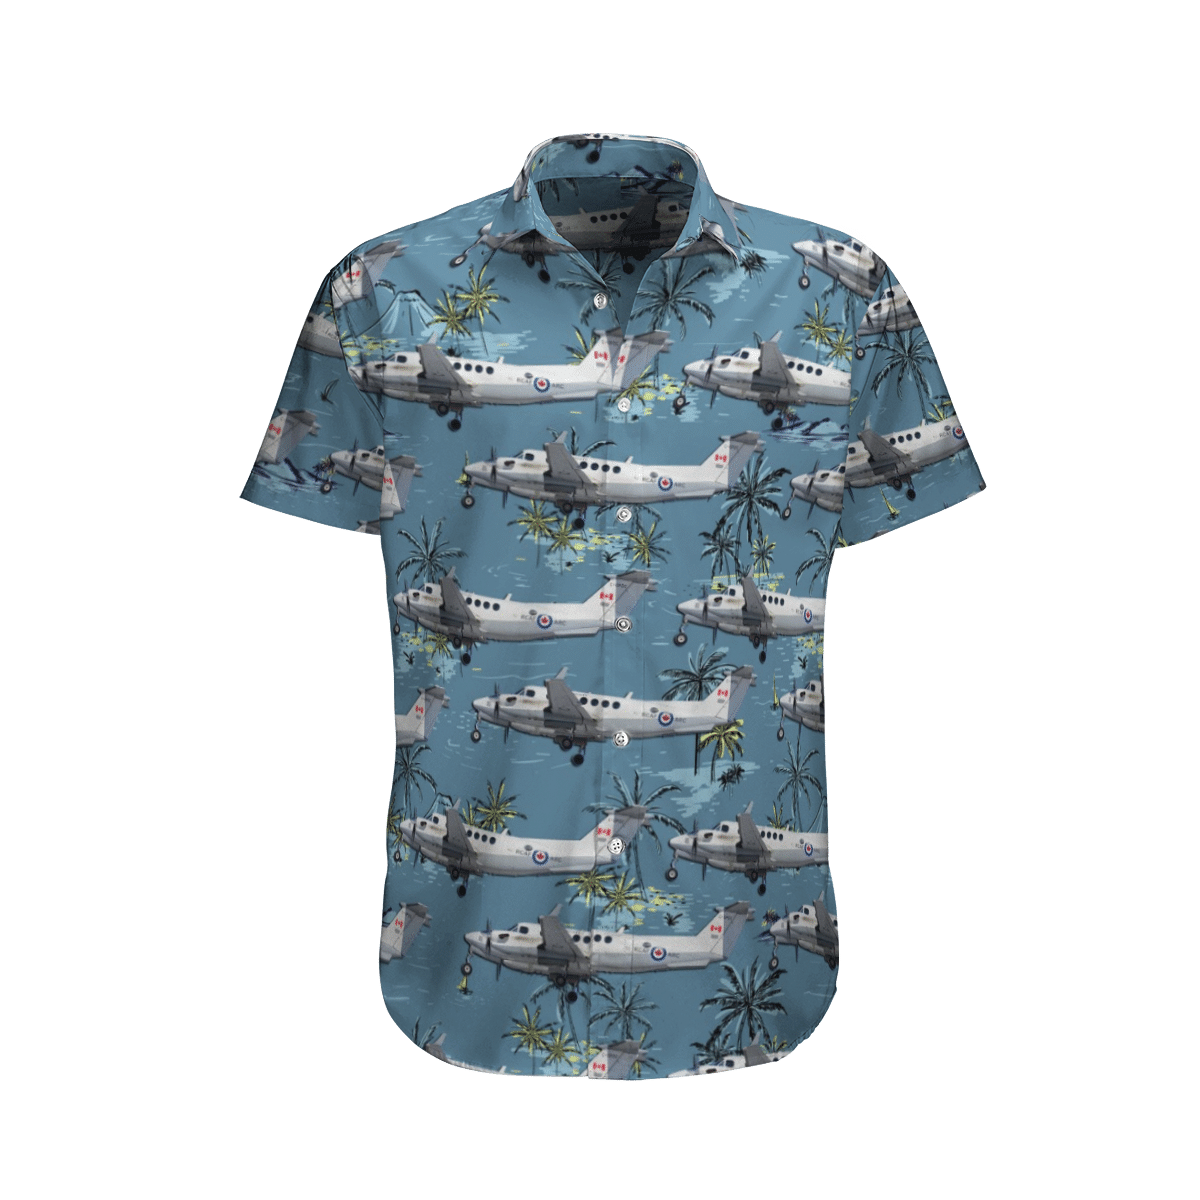 Enjoy your summer with top cool hawaiian shirt below 63